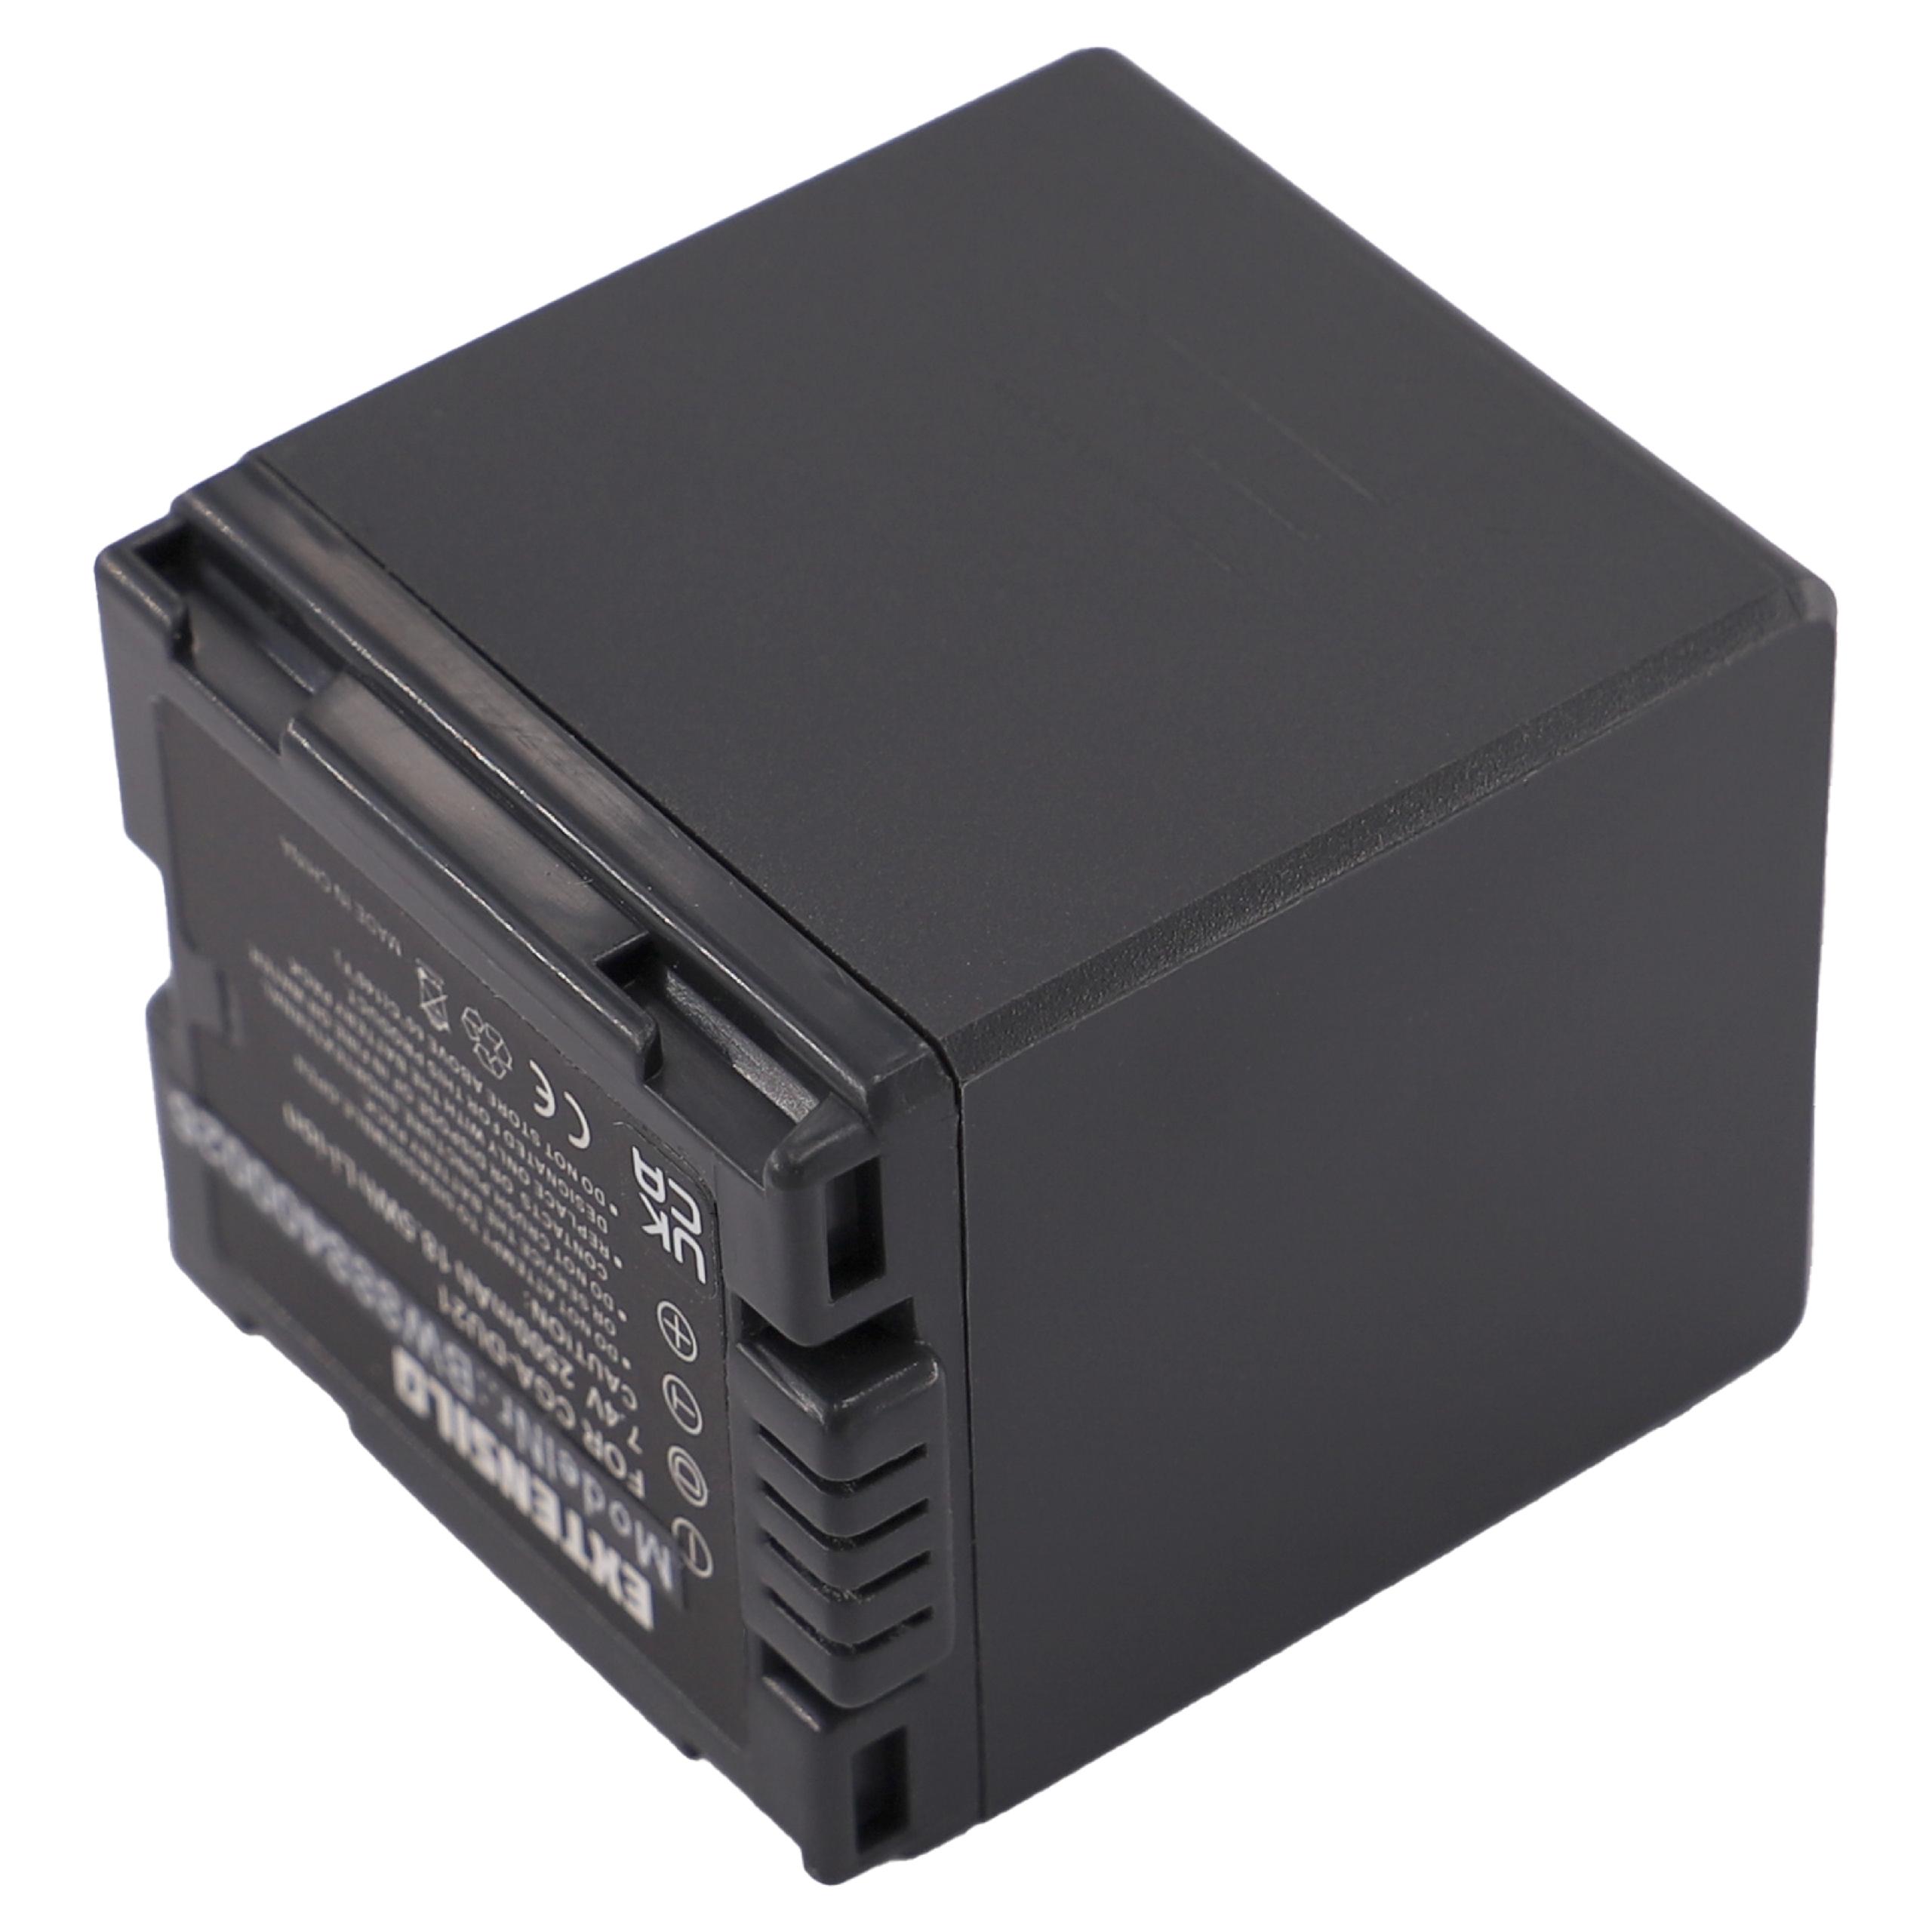 Akumulator do aparatu cyfrowego zamiennik Hitachi DZ-BP21, DZ-BP14s, DZ-BP07s - 2500 mAh 7,4 V Li-Ion